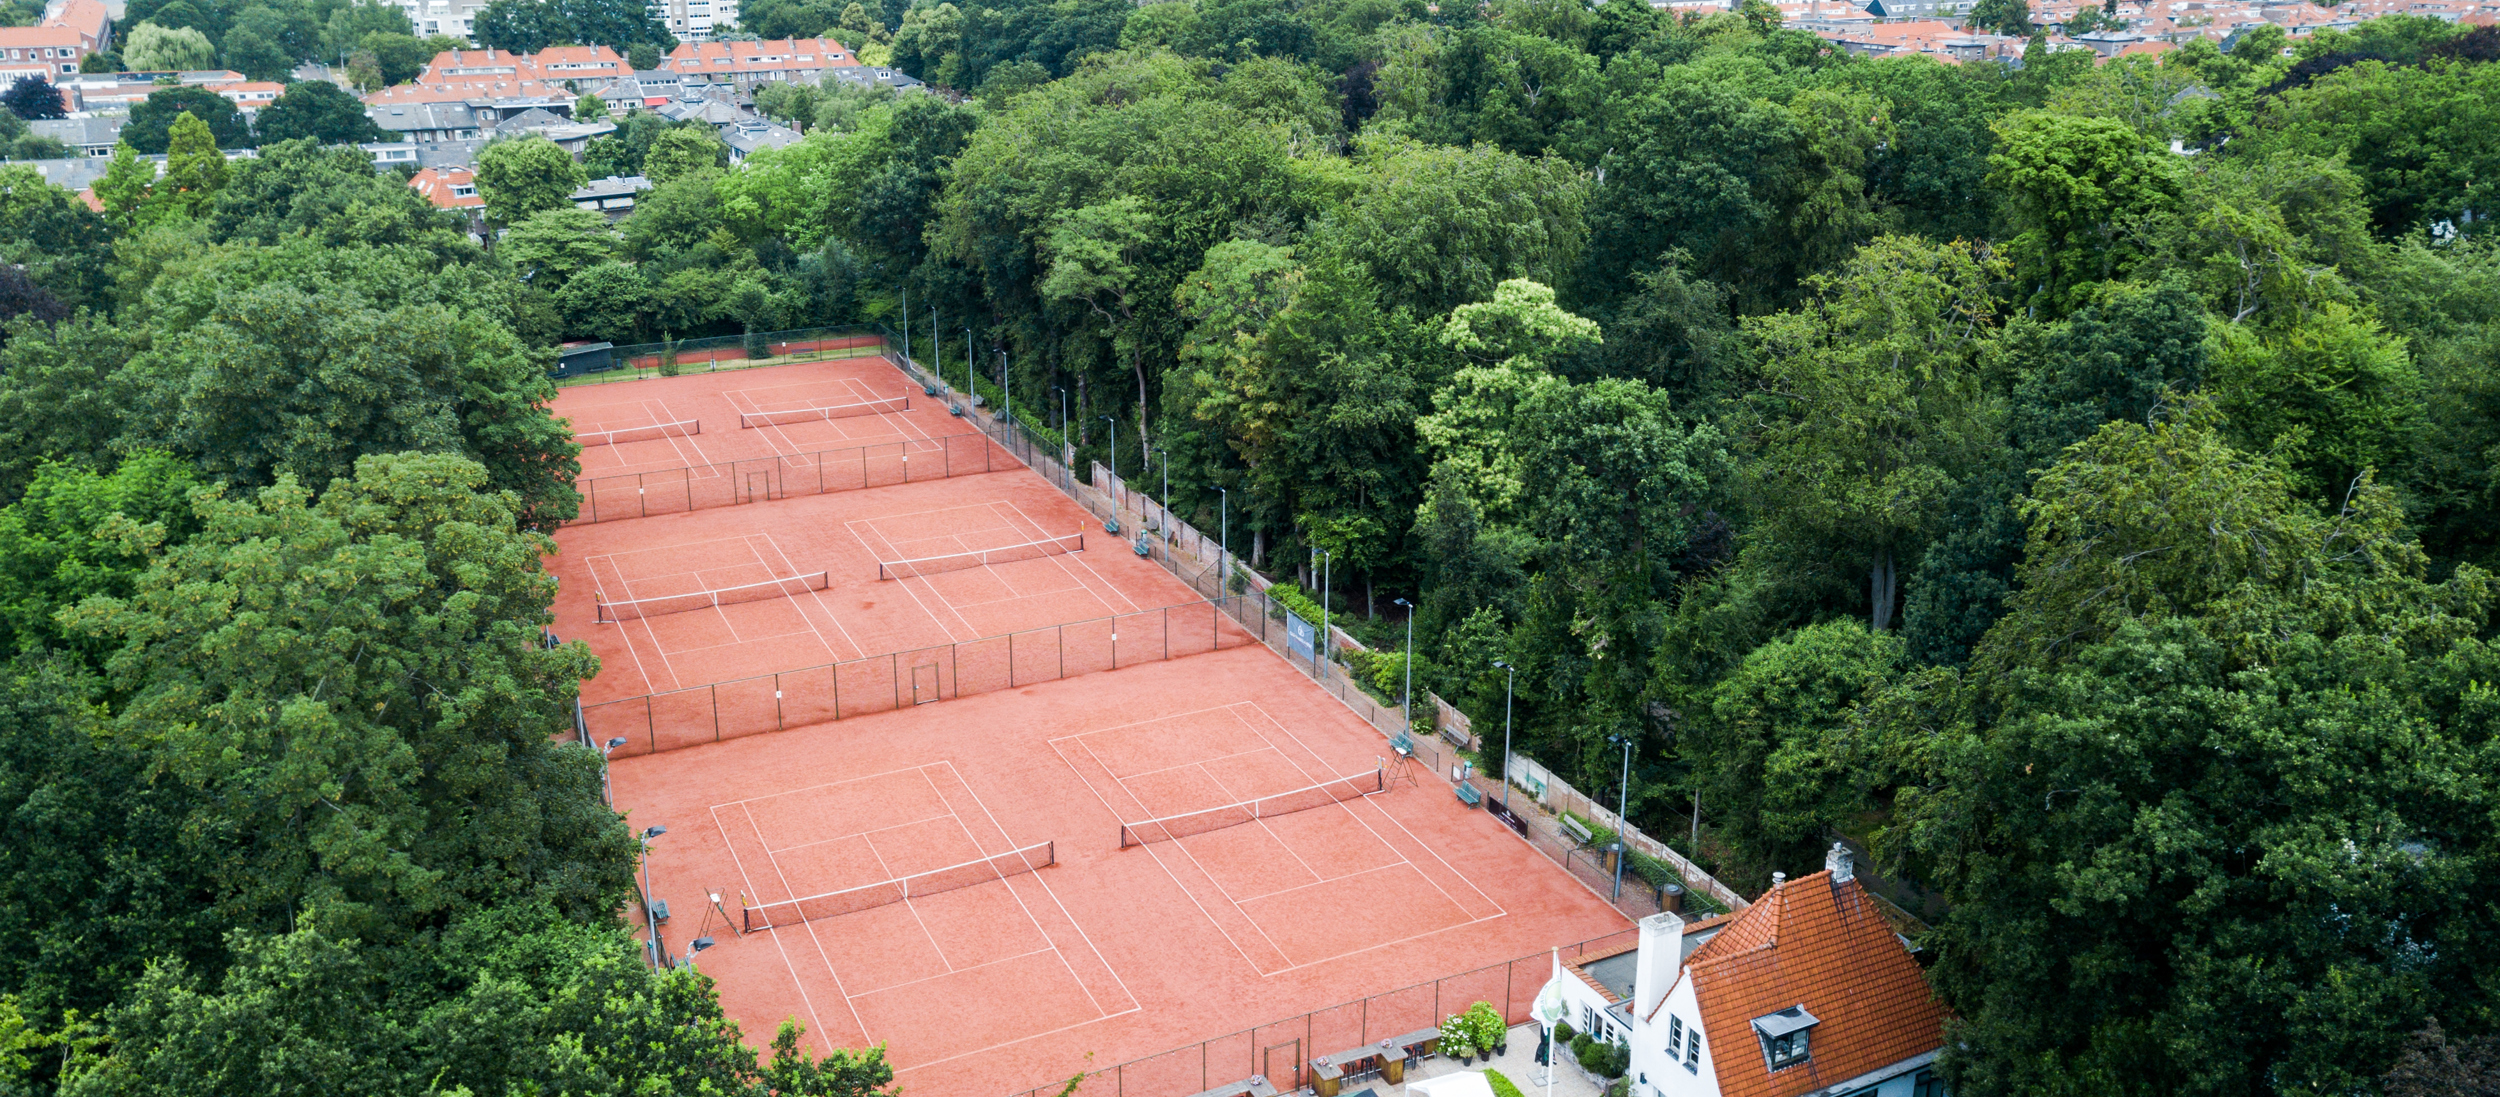 Tennisvereniging groen in stad